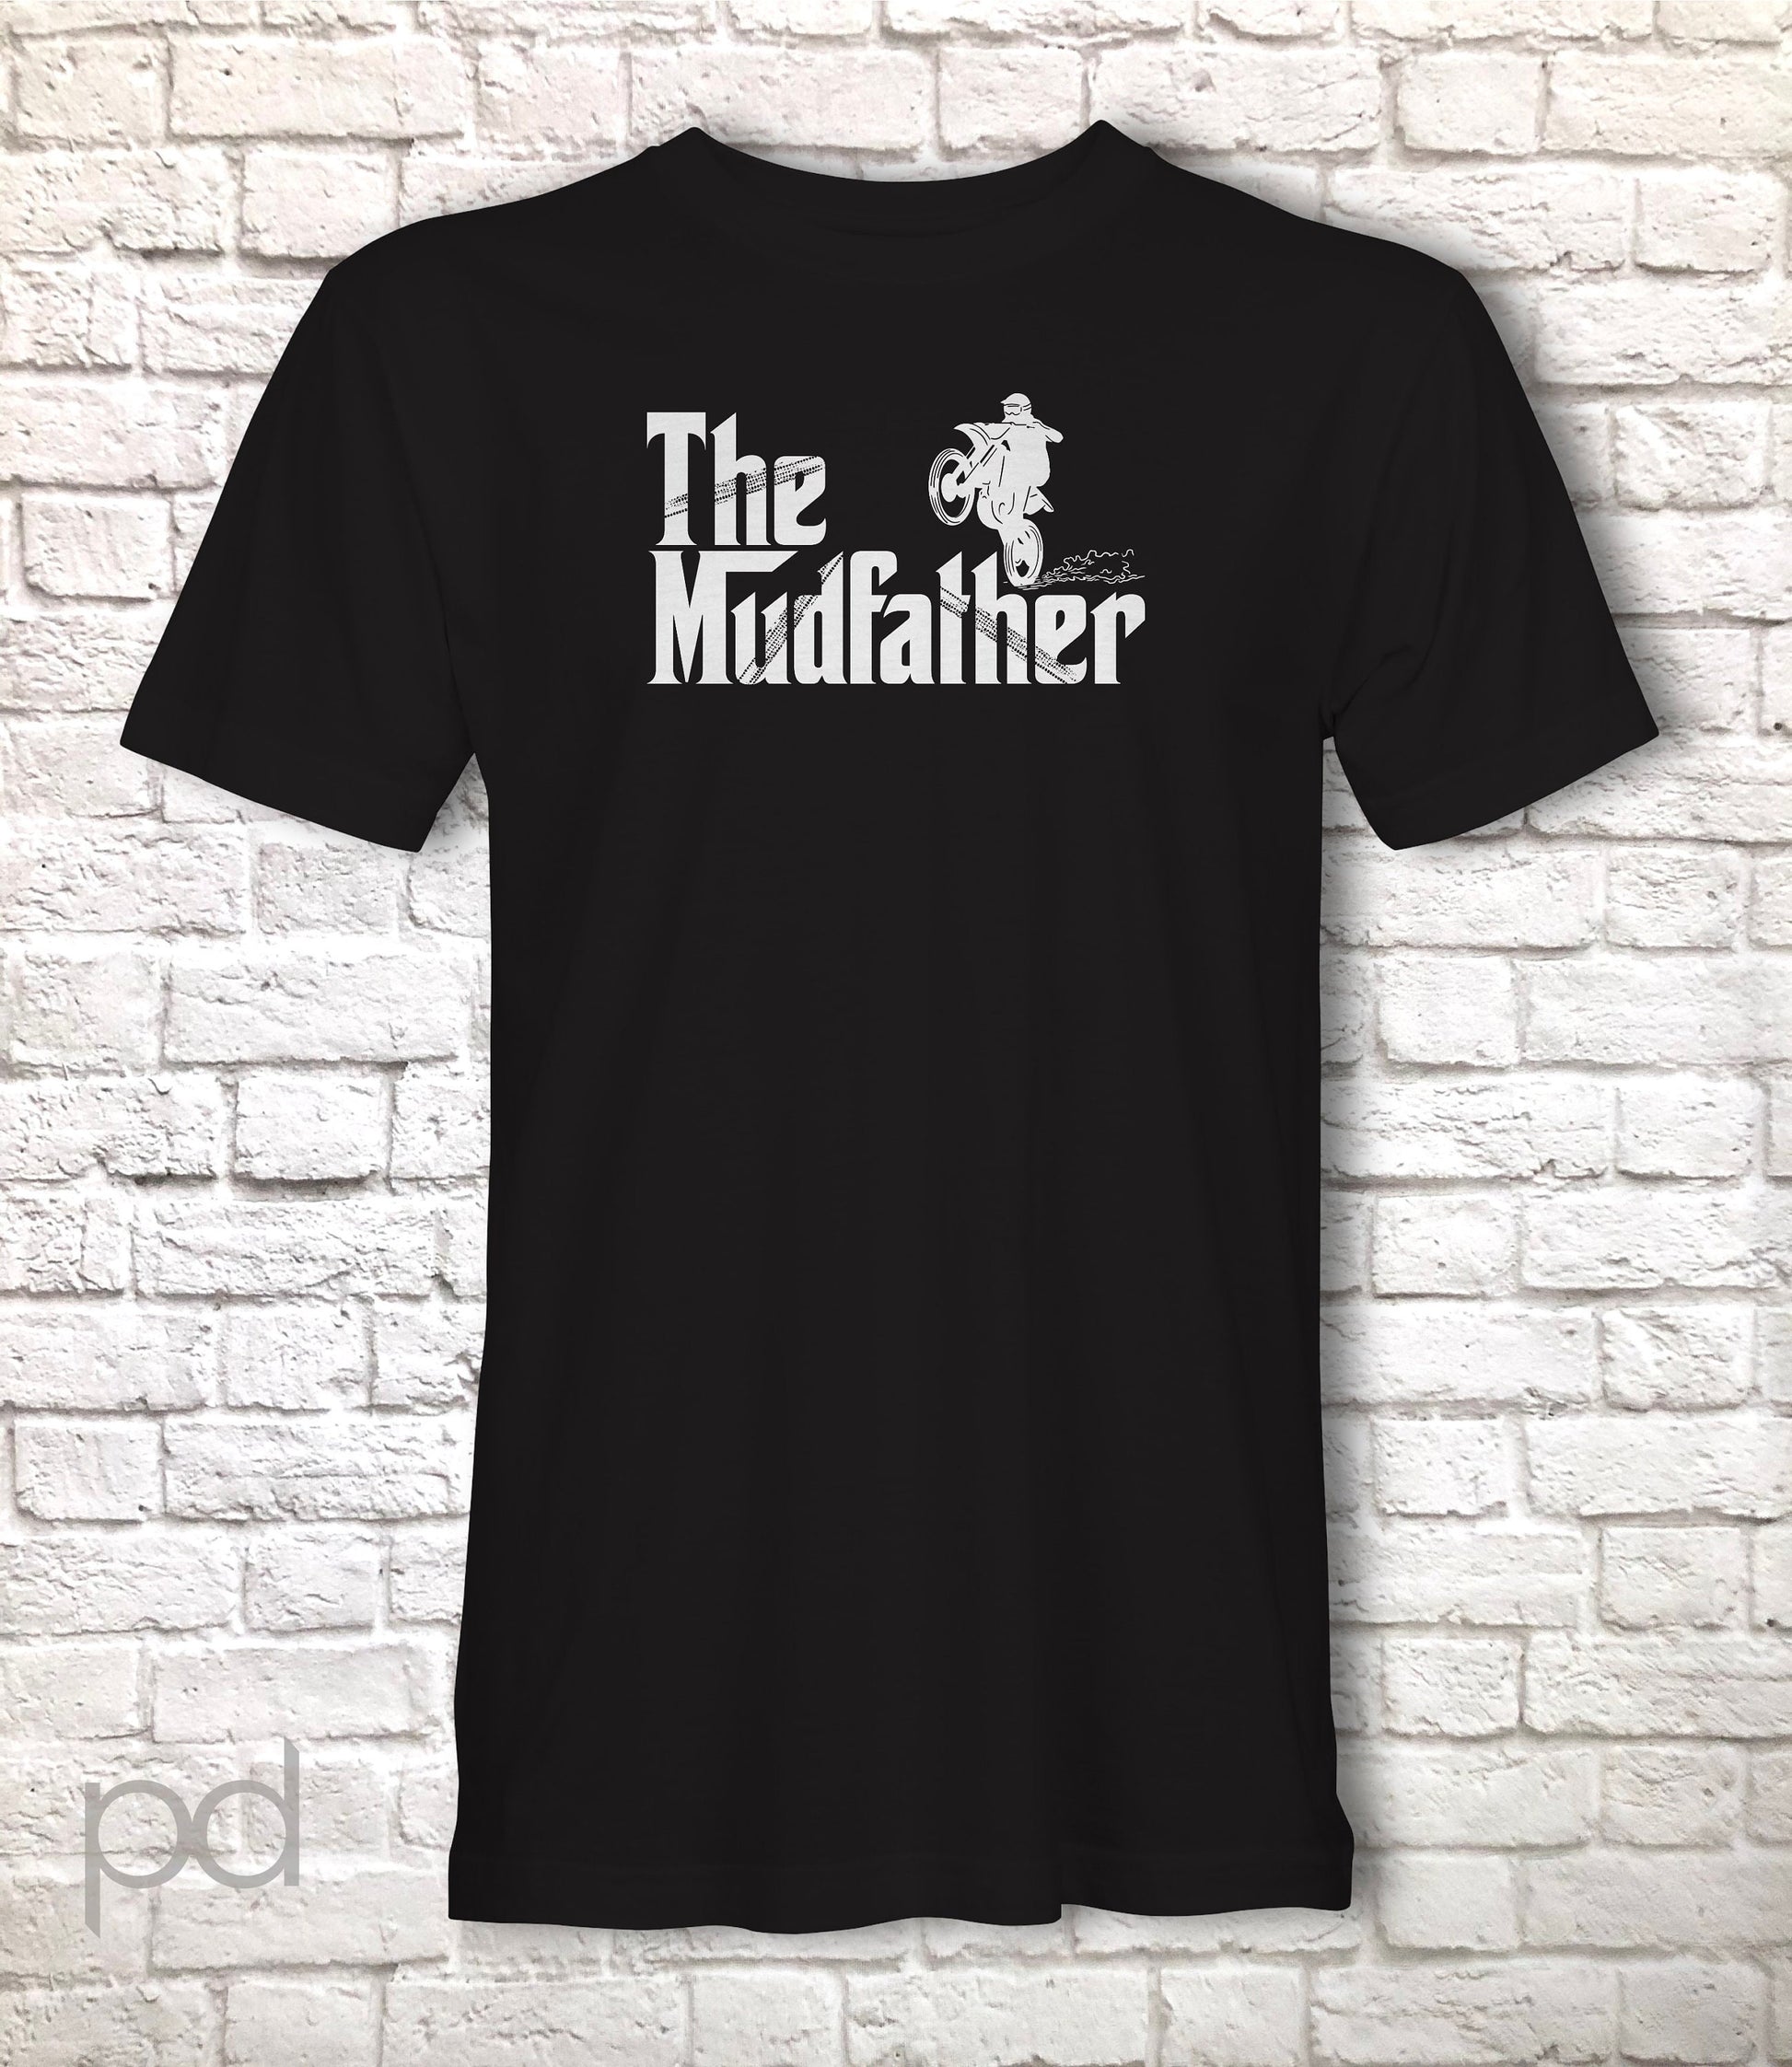 Motocross T-Shirt, Parody The Mudfather Gift Idea, Humorous Dirt Bike Motorcross Tee Shirt T Top